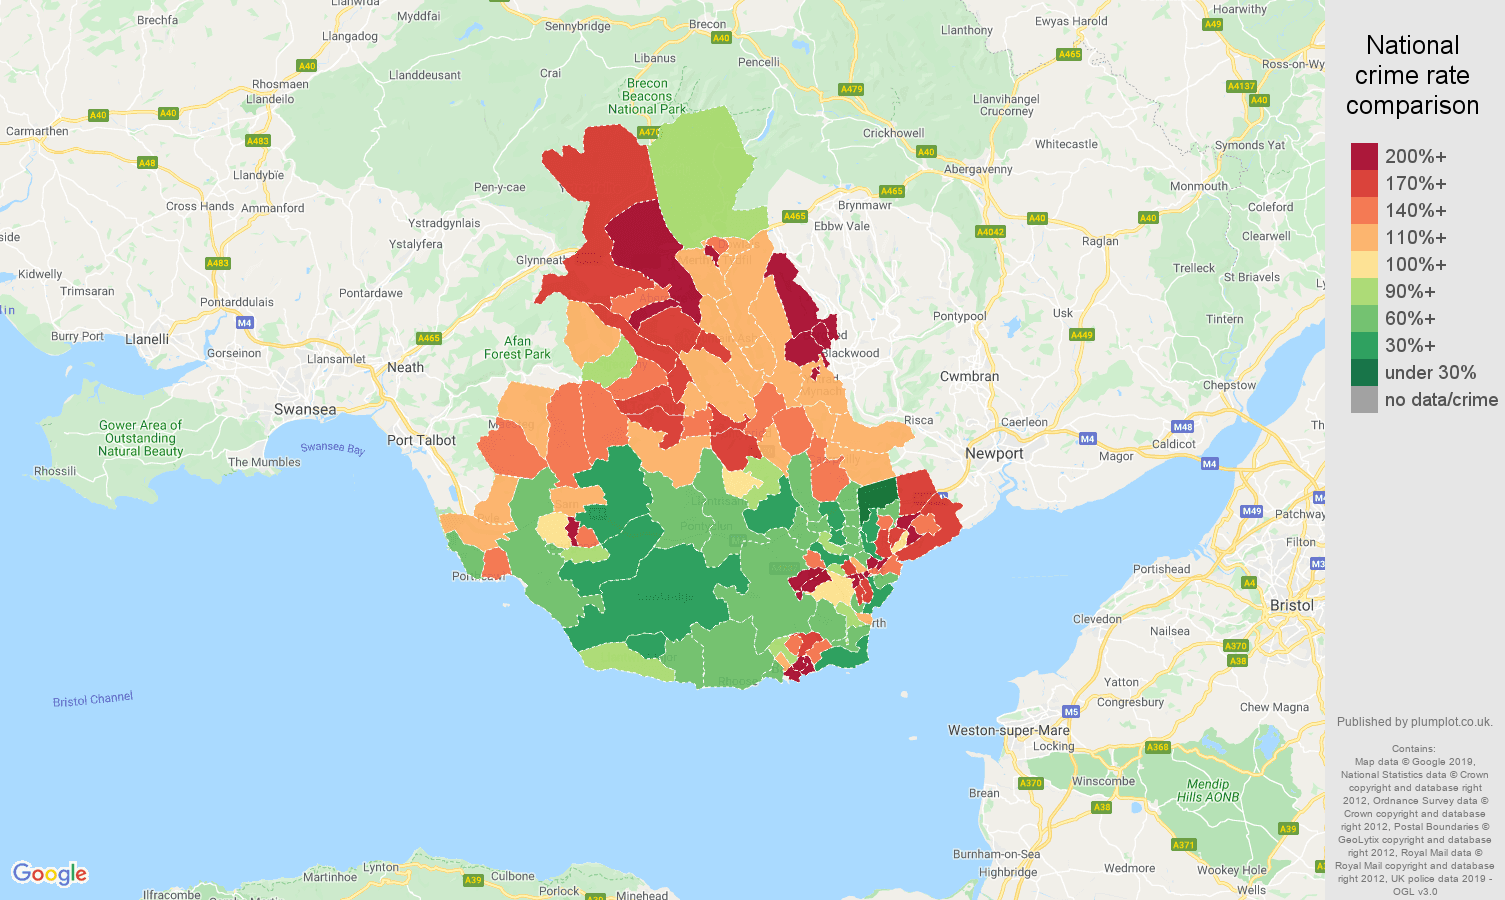 Cardiff public order crime rate comparison map